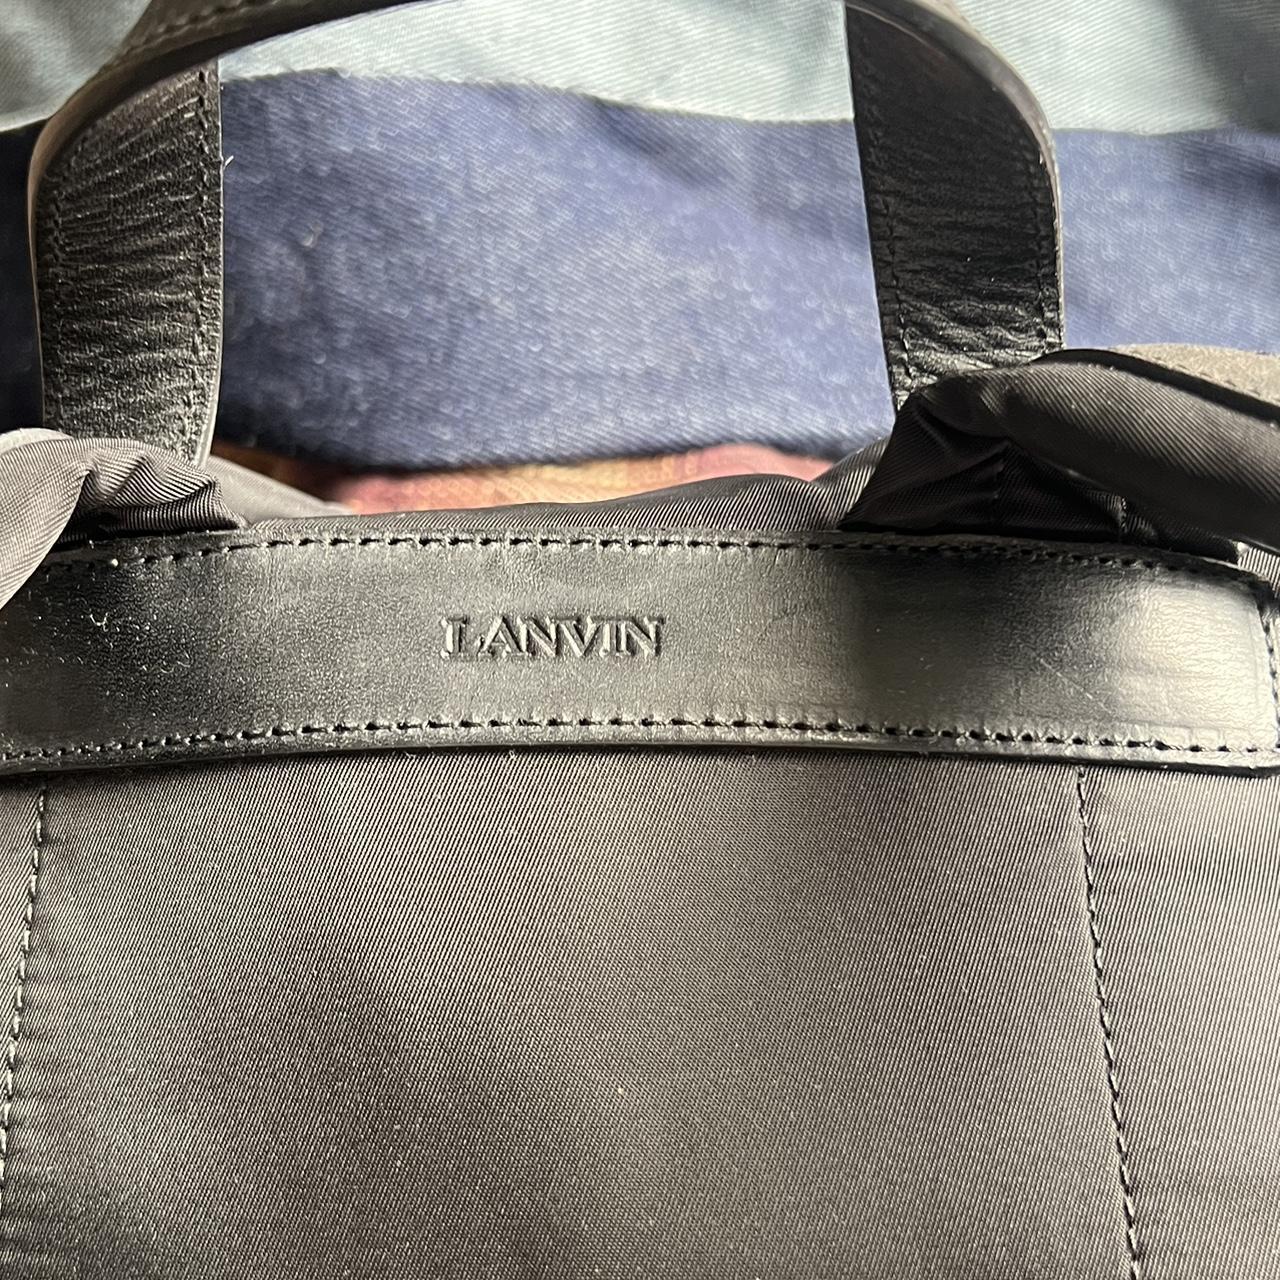 Lanvin Men's Black Bag (3)